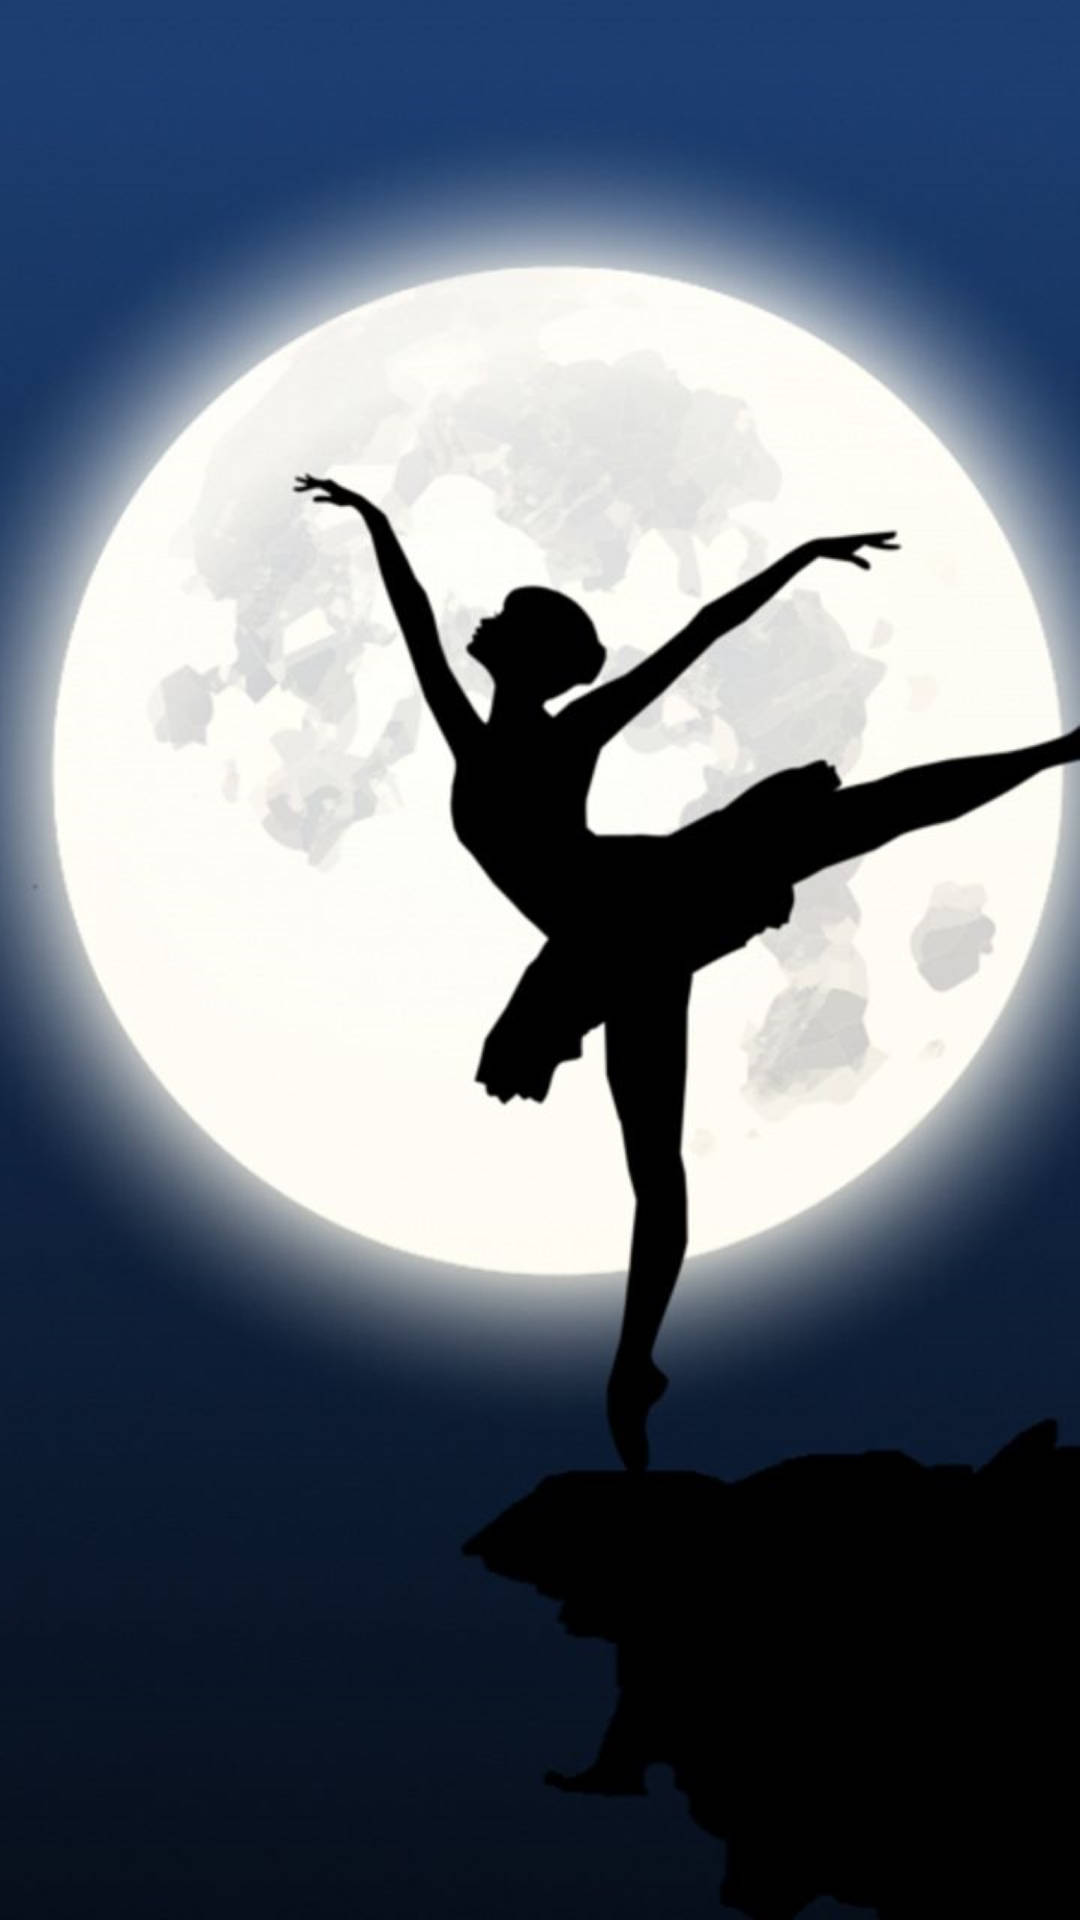 Enchanting Ballet Dance Under The Moonlight Background